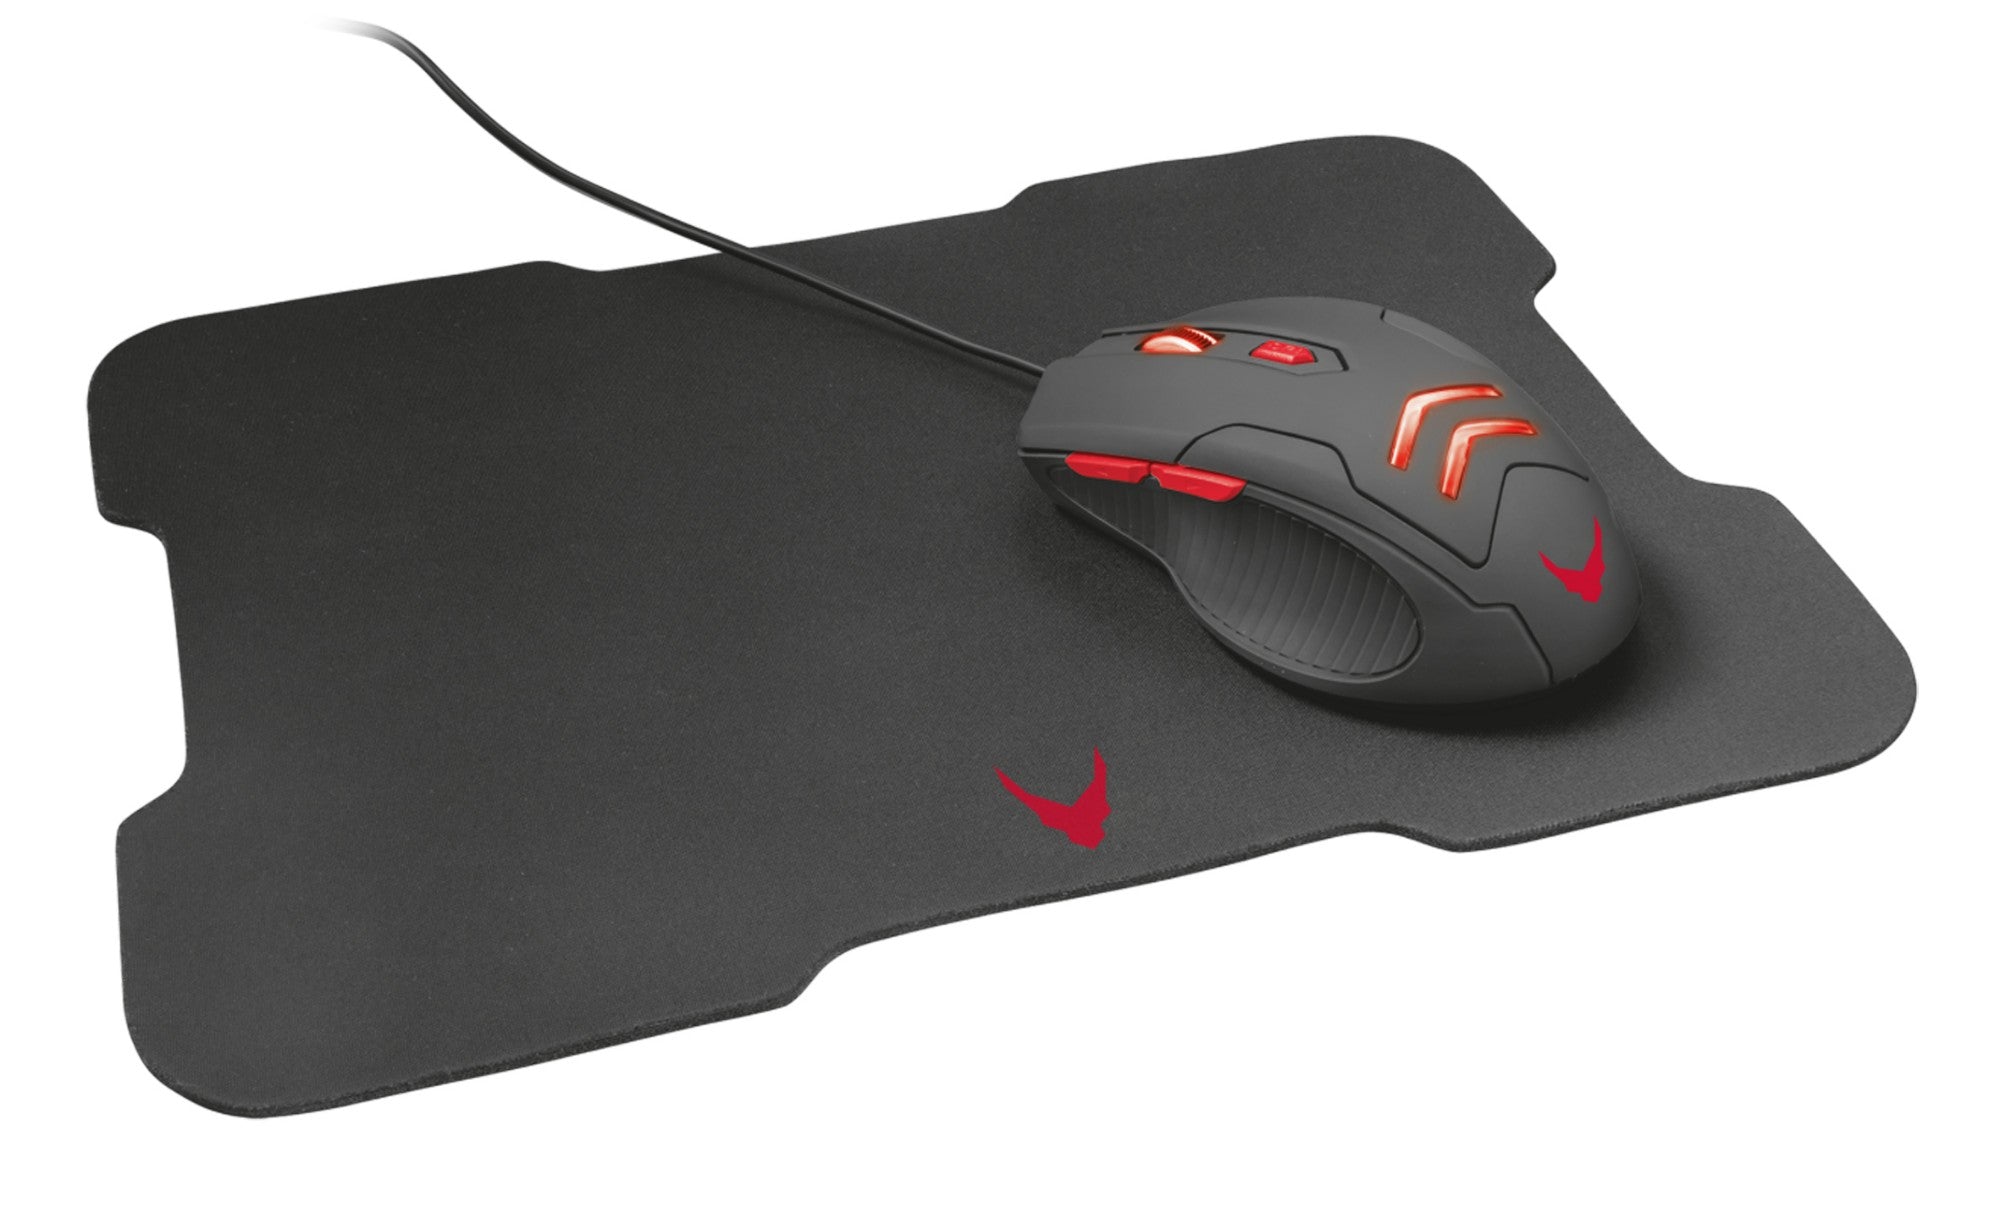 Gaming Mouse and Mousepad/Mat Set